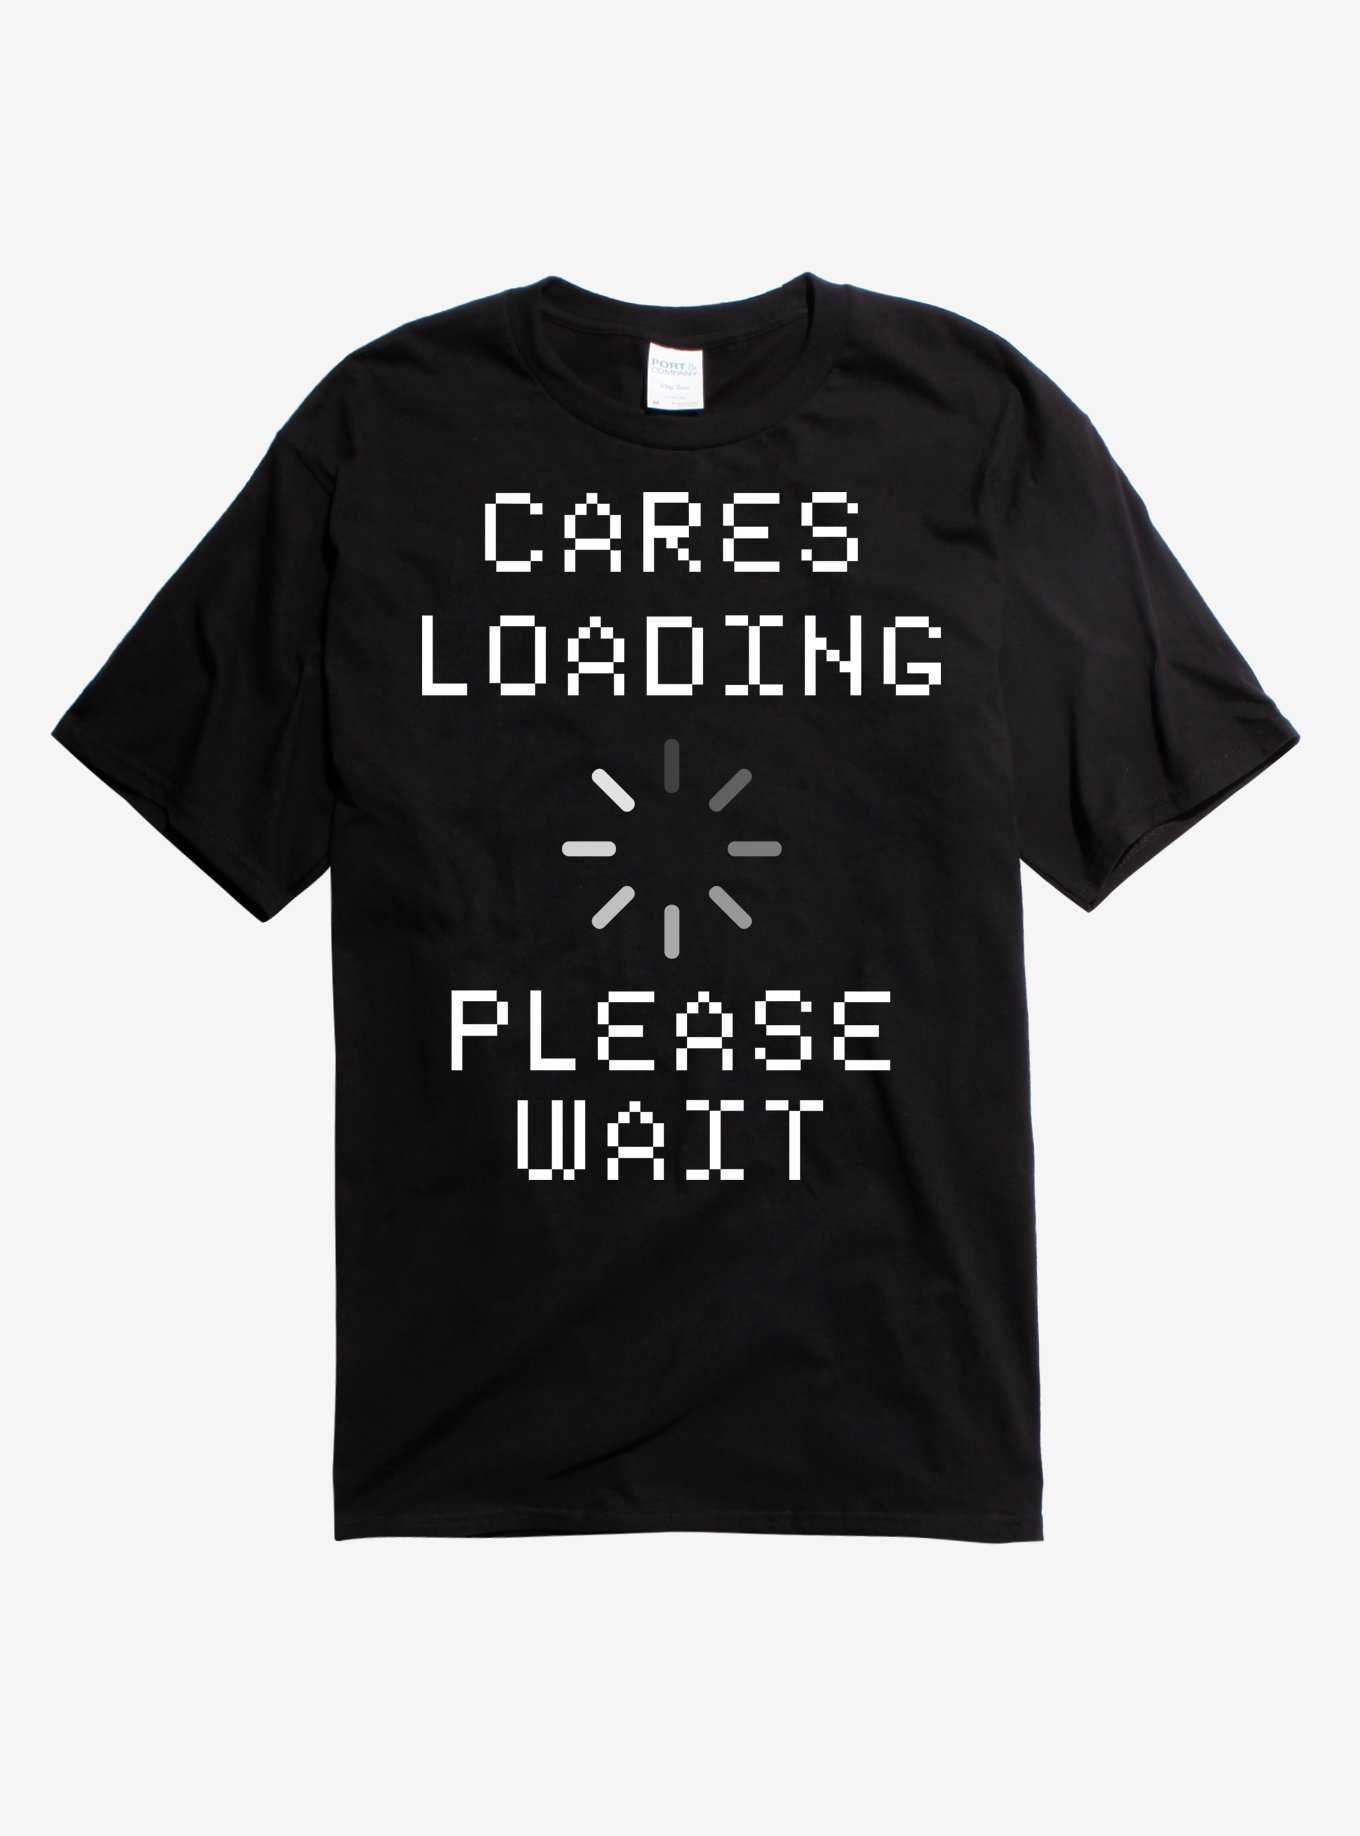 Cares Loading T-Shirt, , hi-res